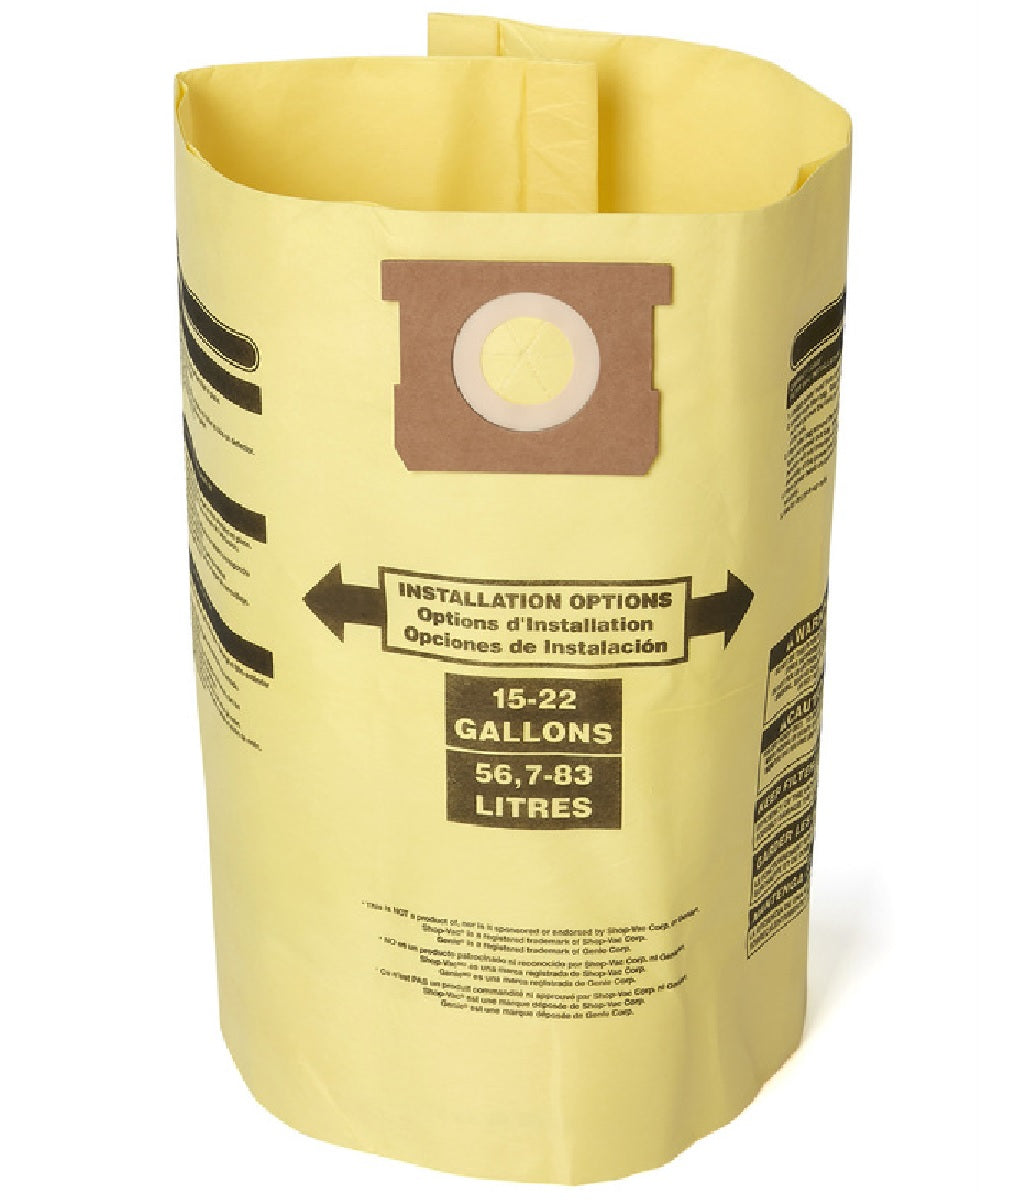 Craftsman CMXZVBE38769 Shop-Vac Wet/Dry Vacuum Filter Bag, Yellow